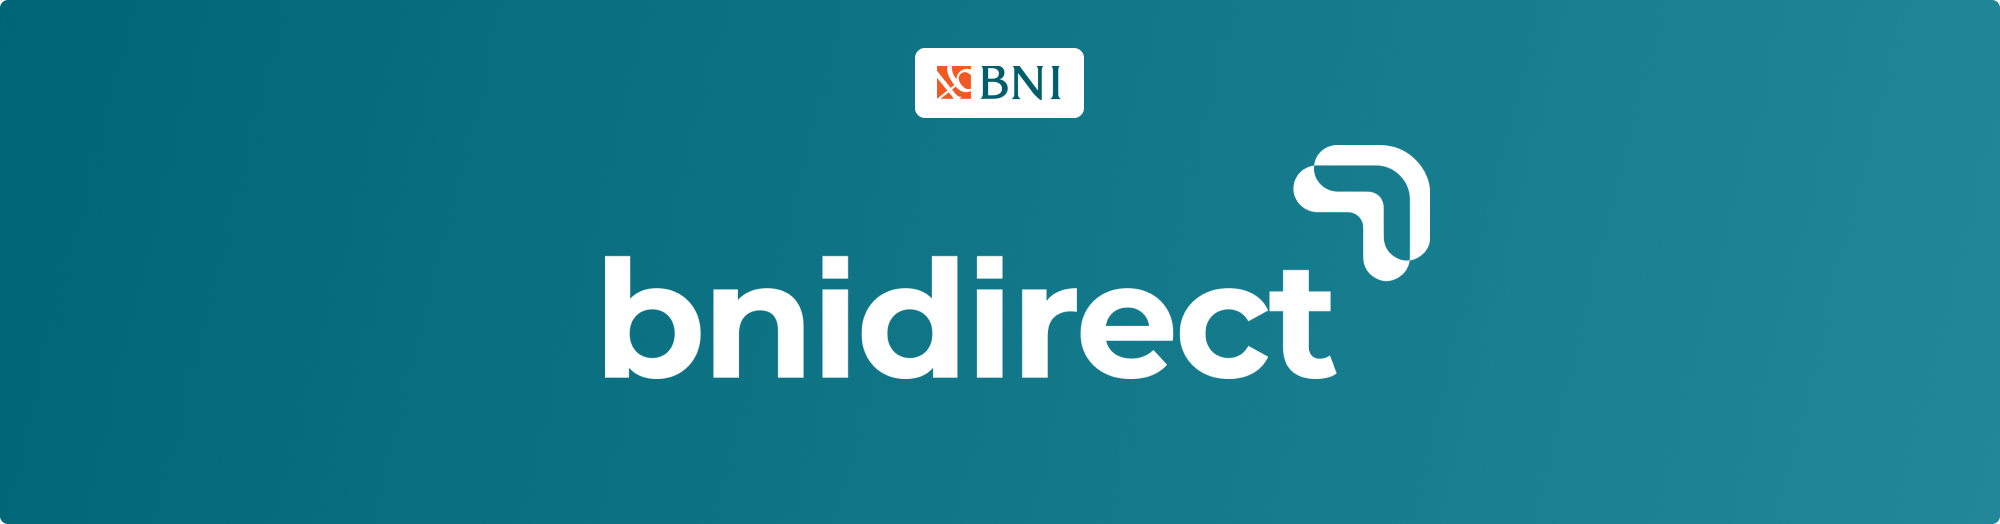 BNI-Direct